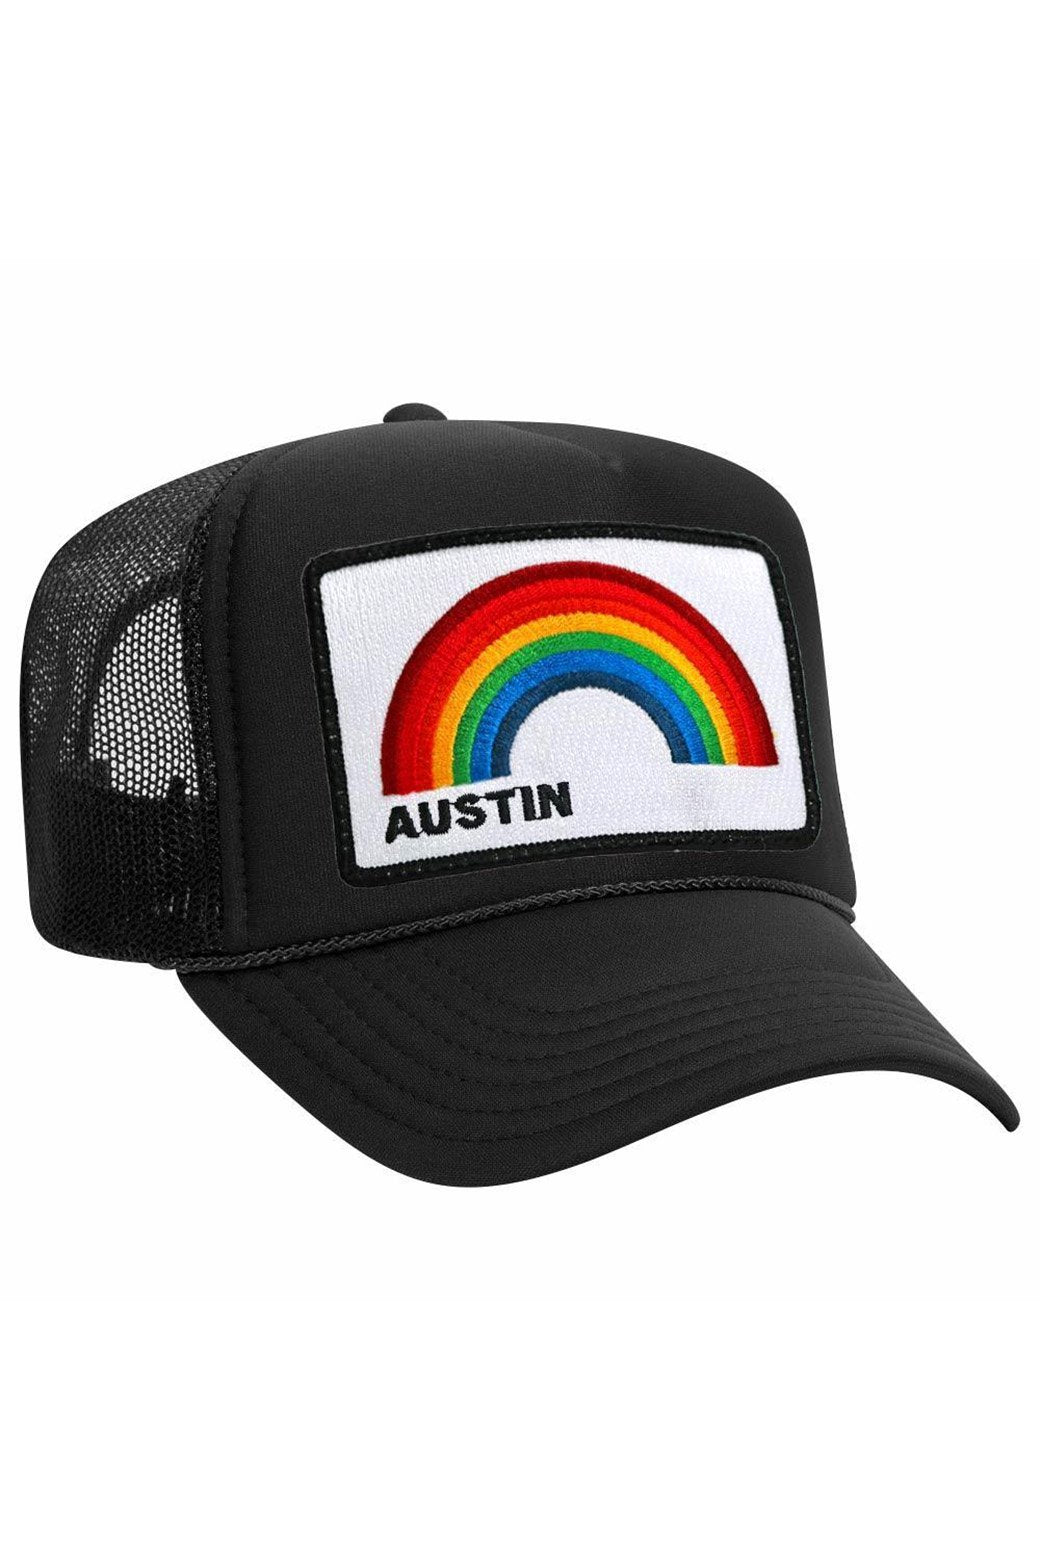 AUSTIN RAINBOW TRUCKER HAT HATS Aviator Nation OS BLACK 